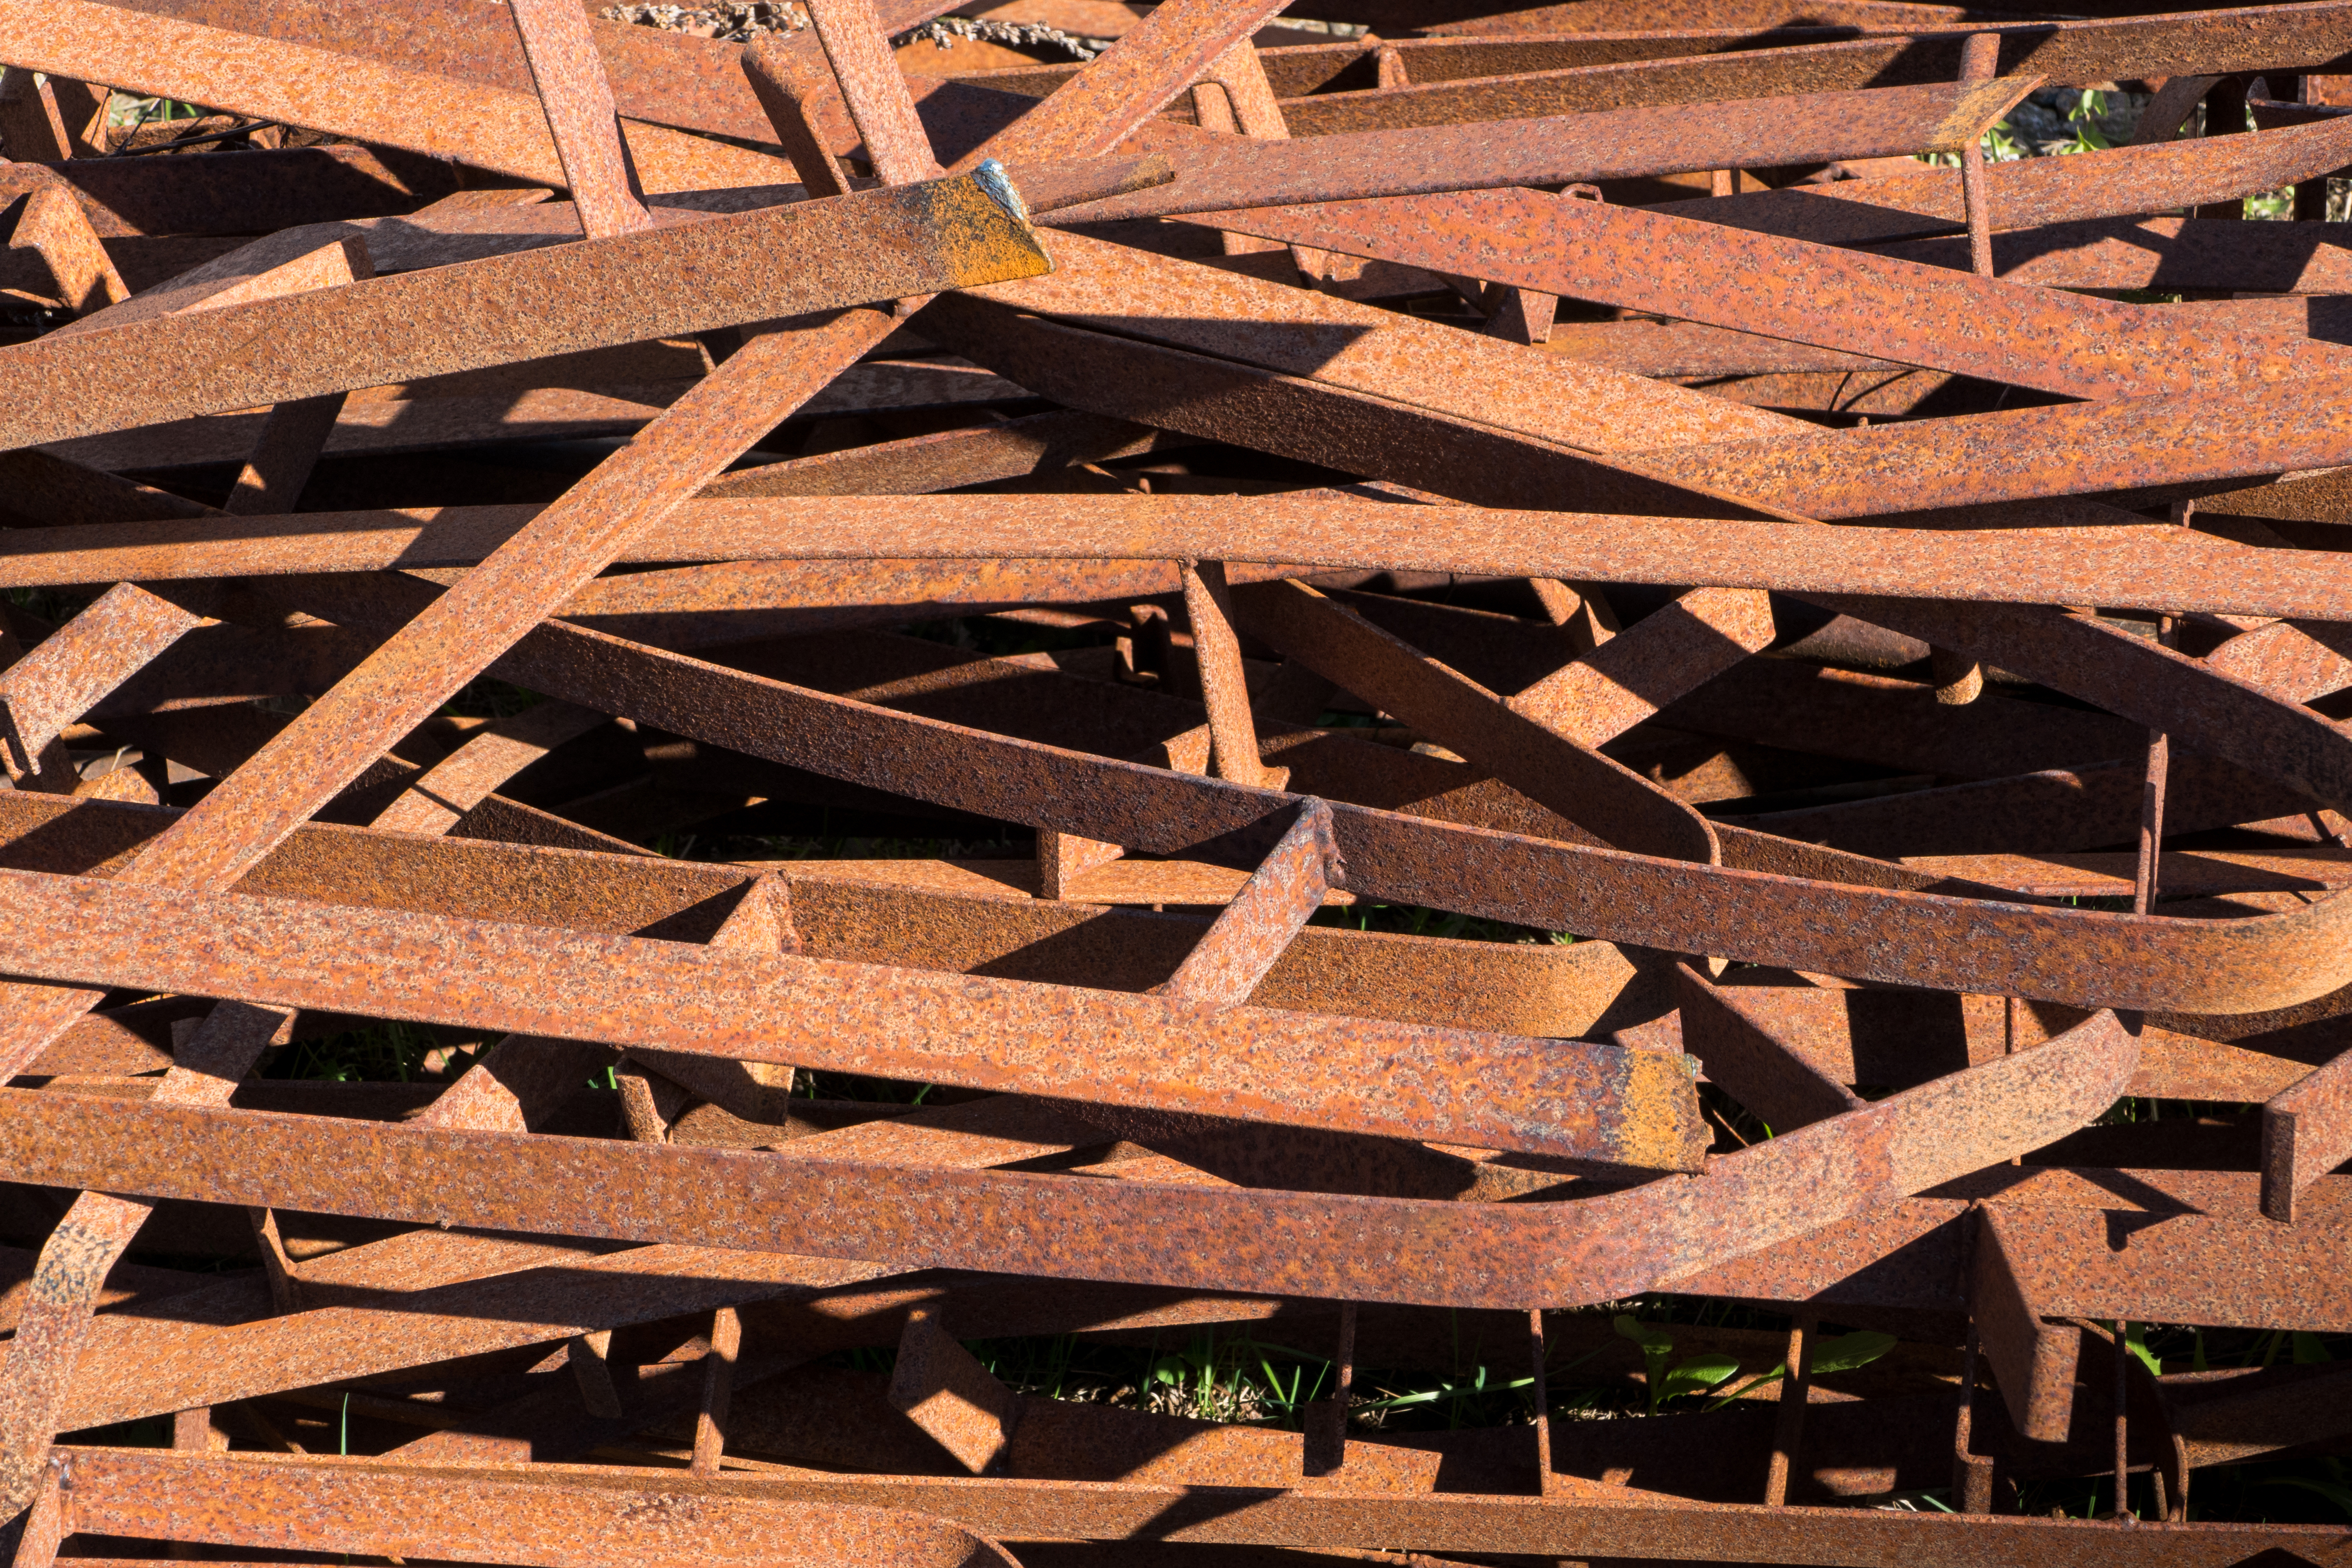 Rusty bands of scrap iron